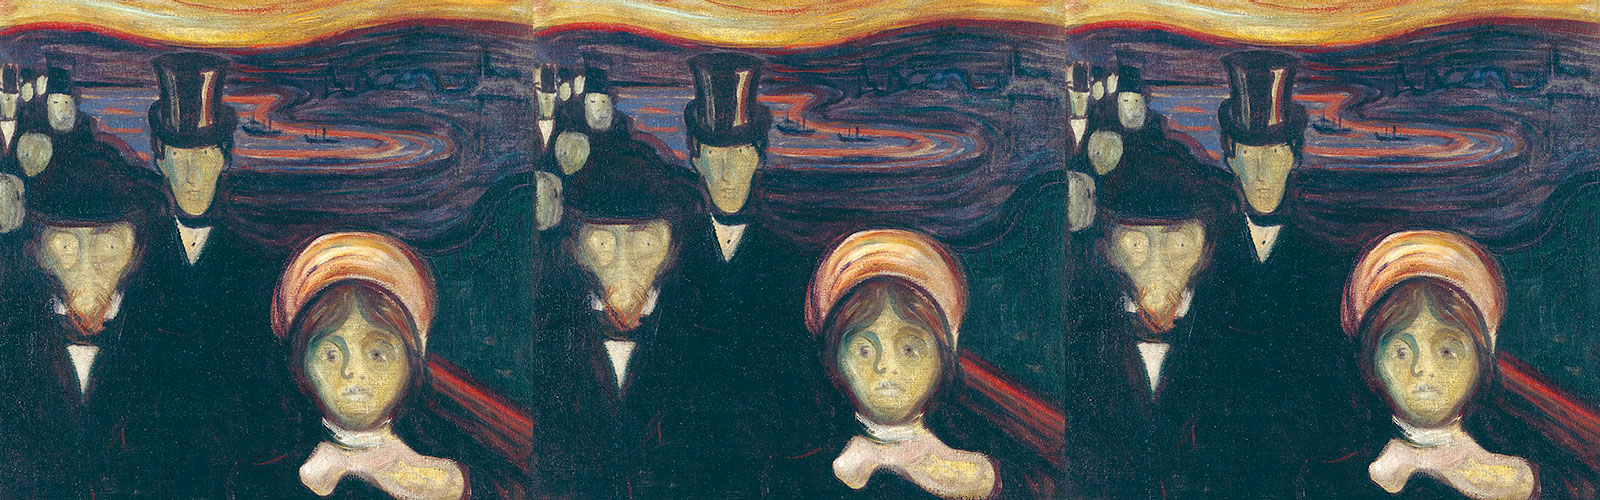 L'ansia - Edvard Munch